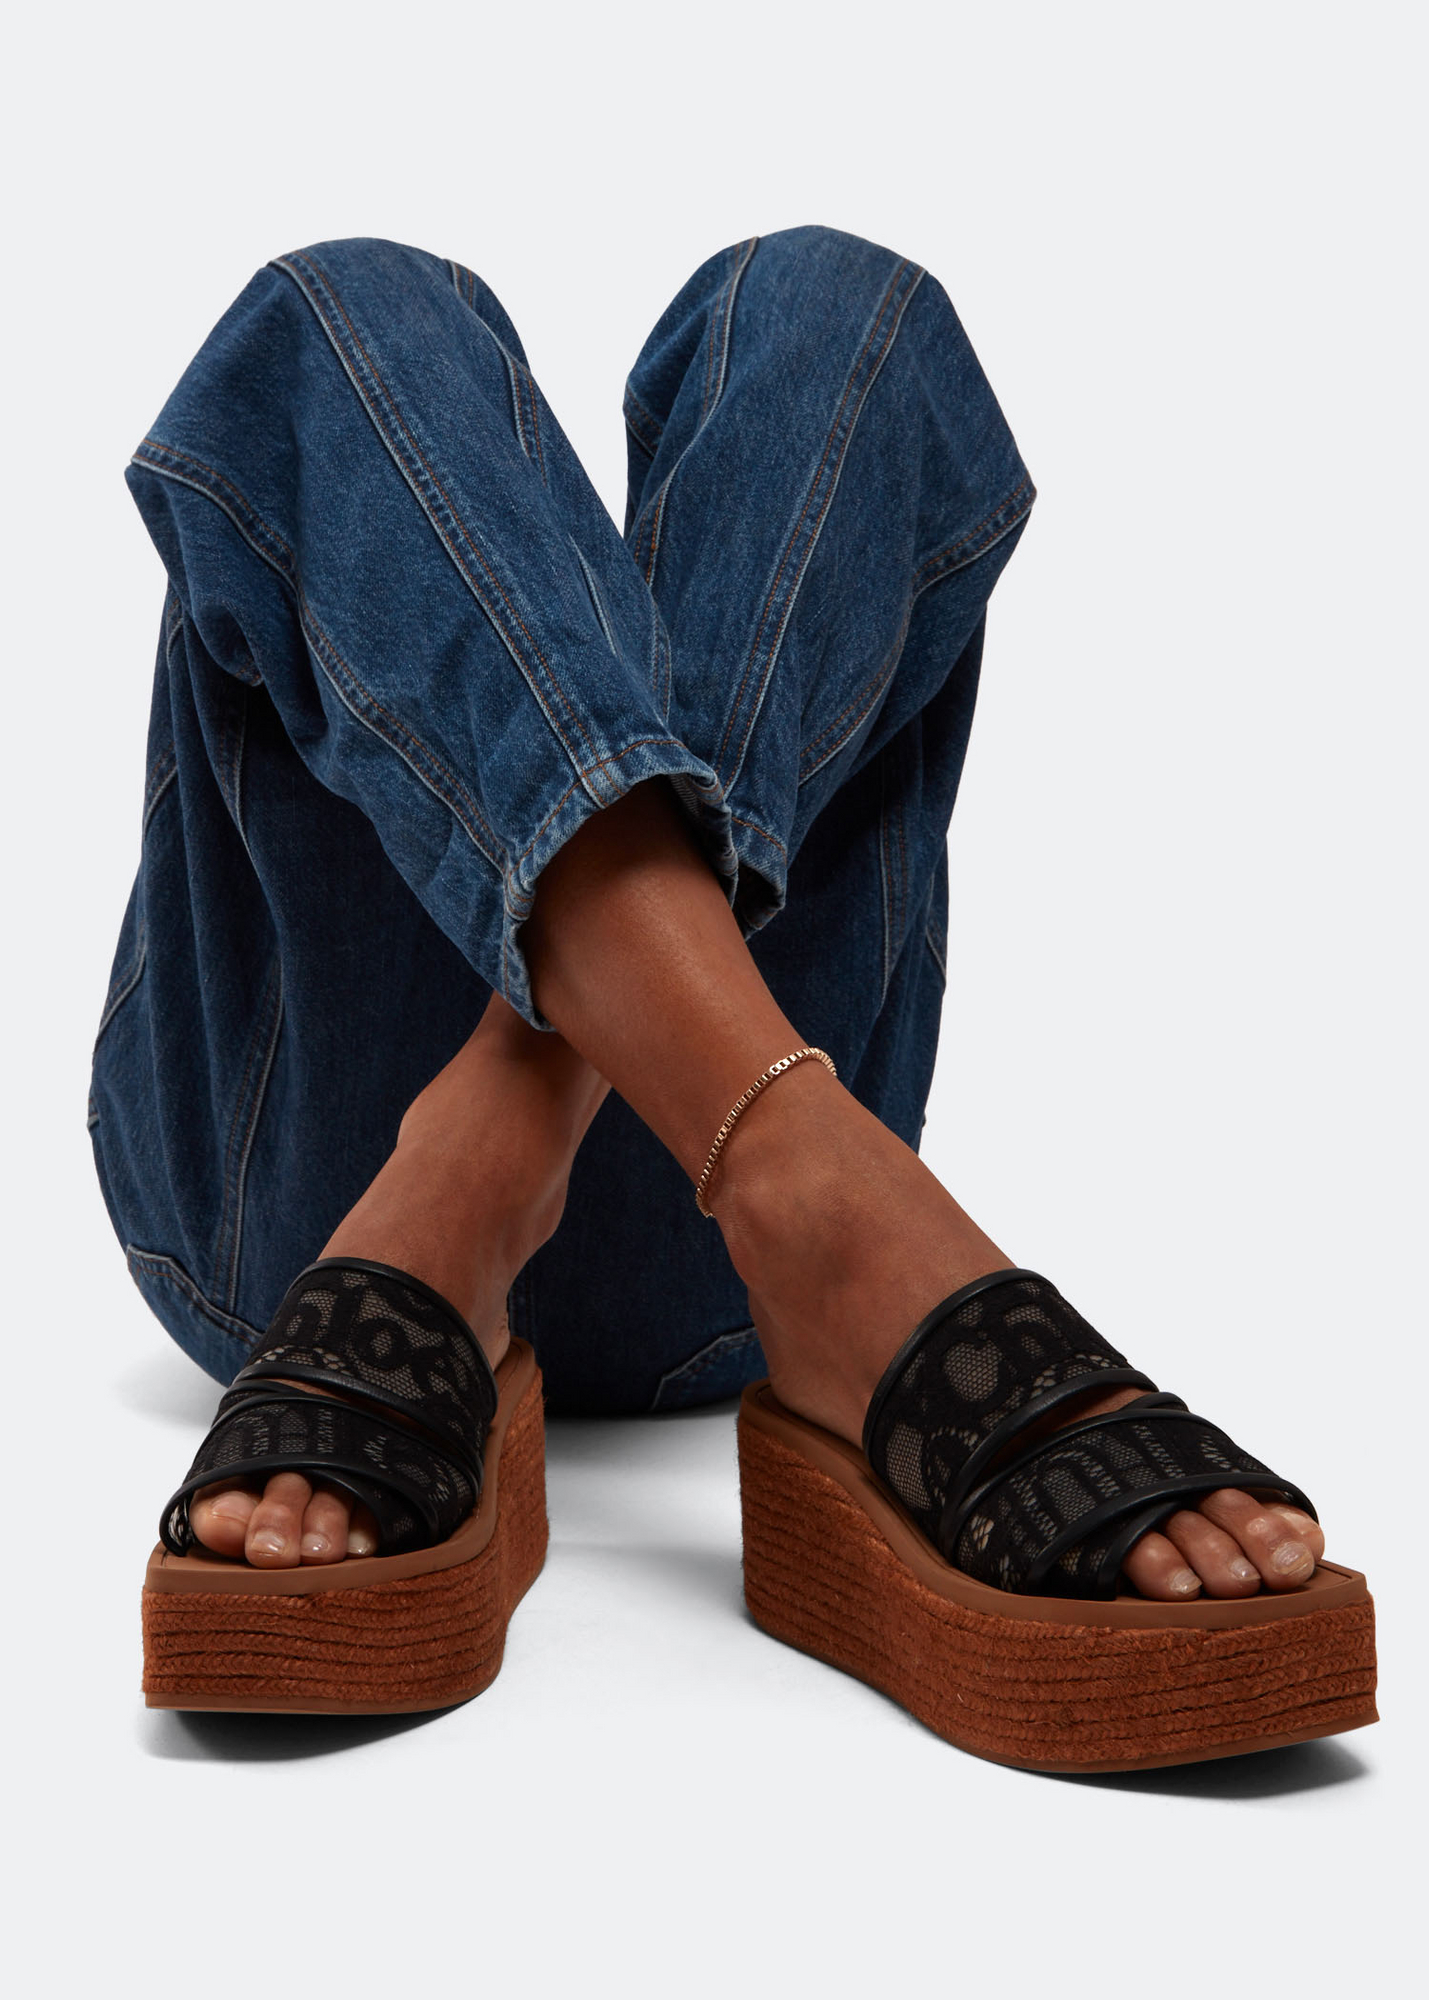 Chloé Woody wedge espadrilles for Women - Black in KSA | Level Shoes